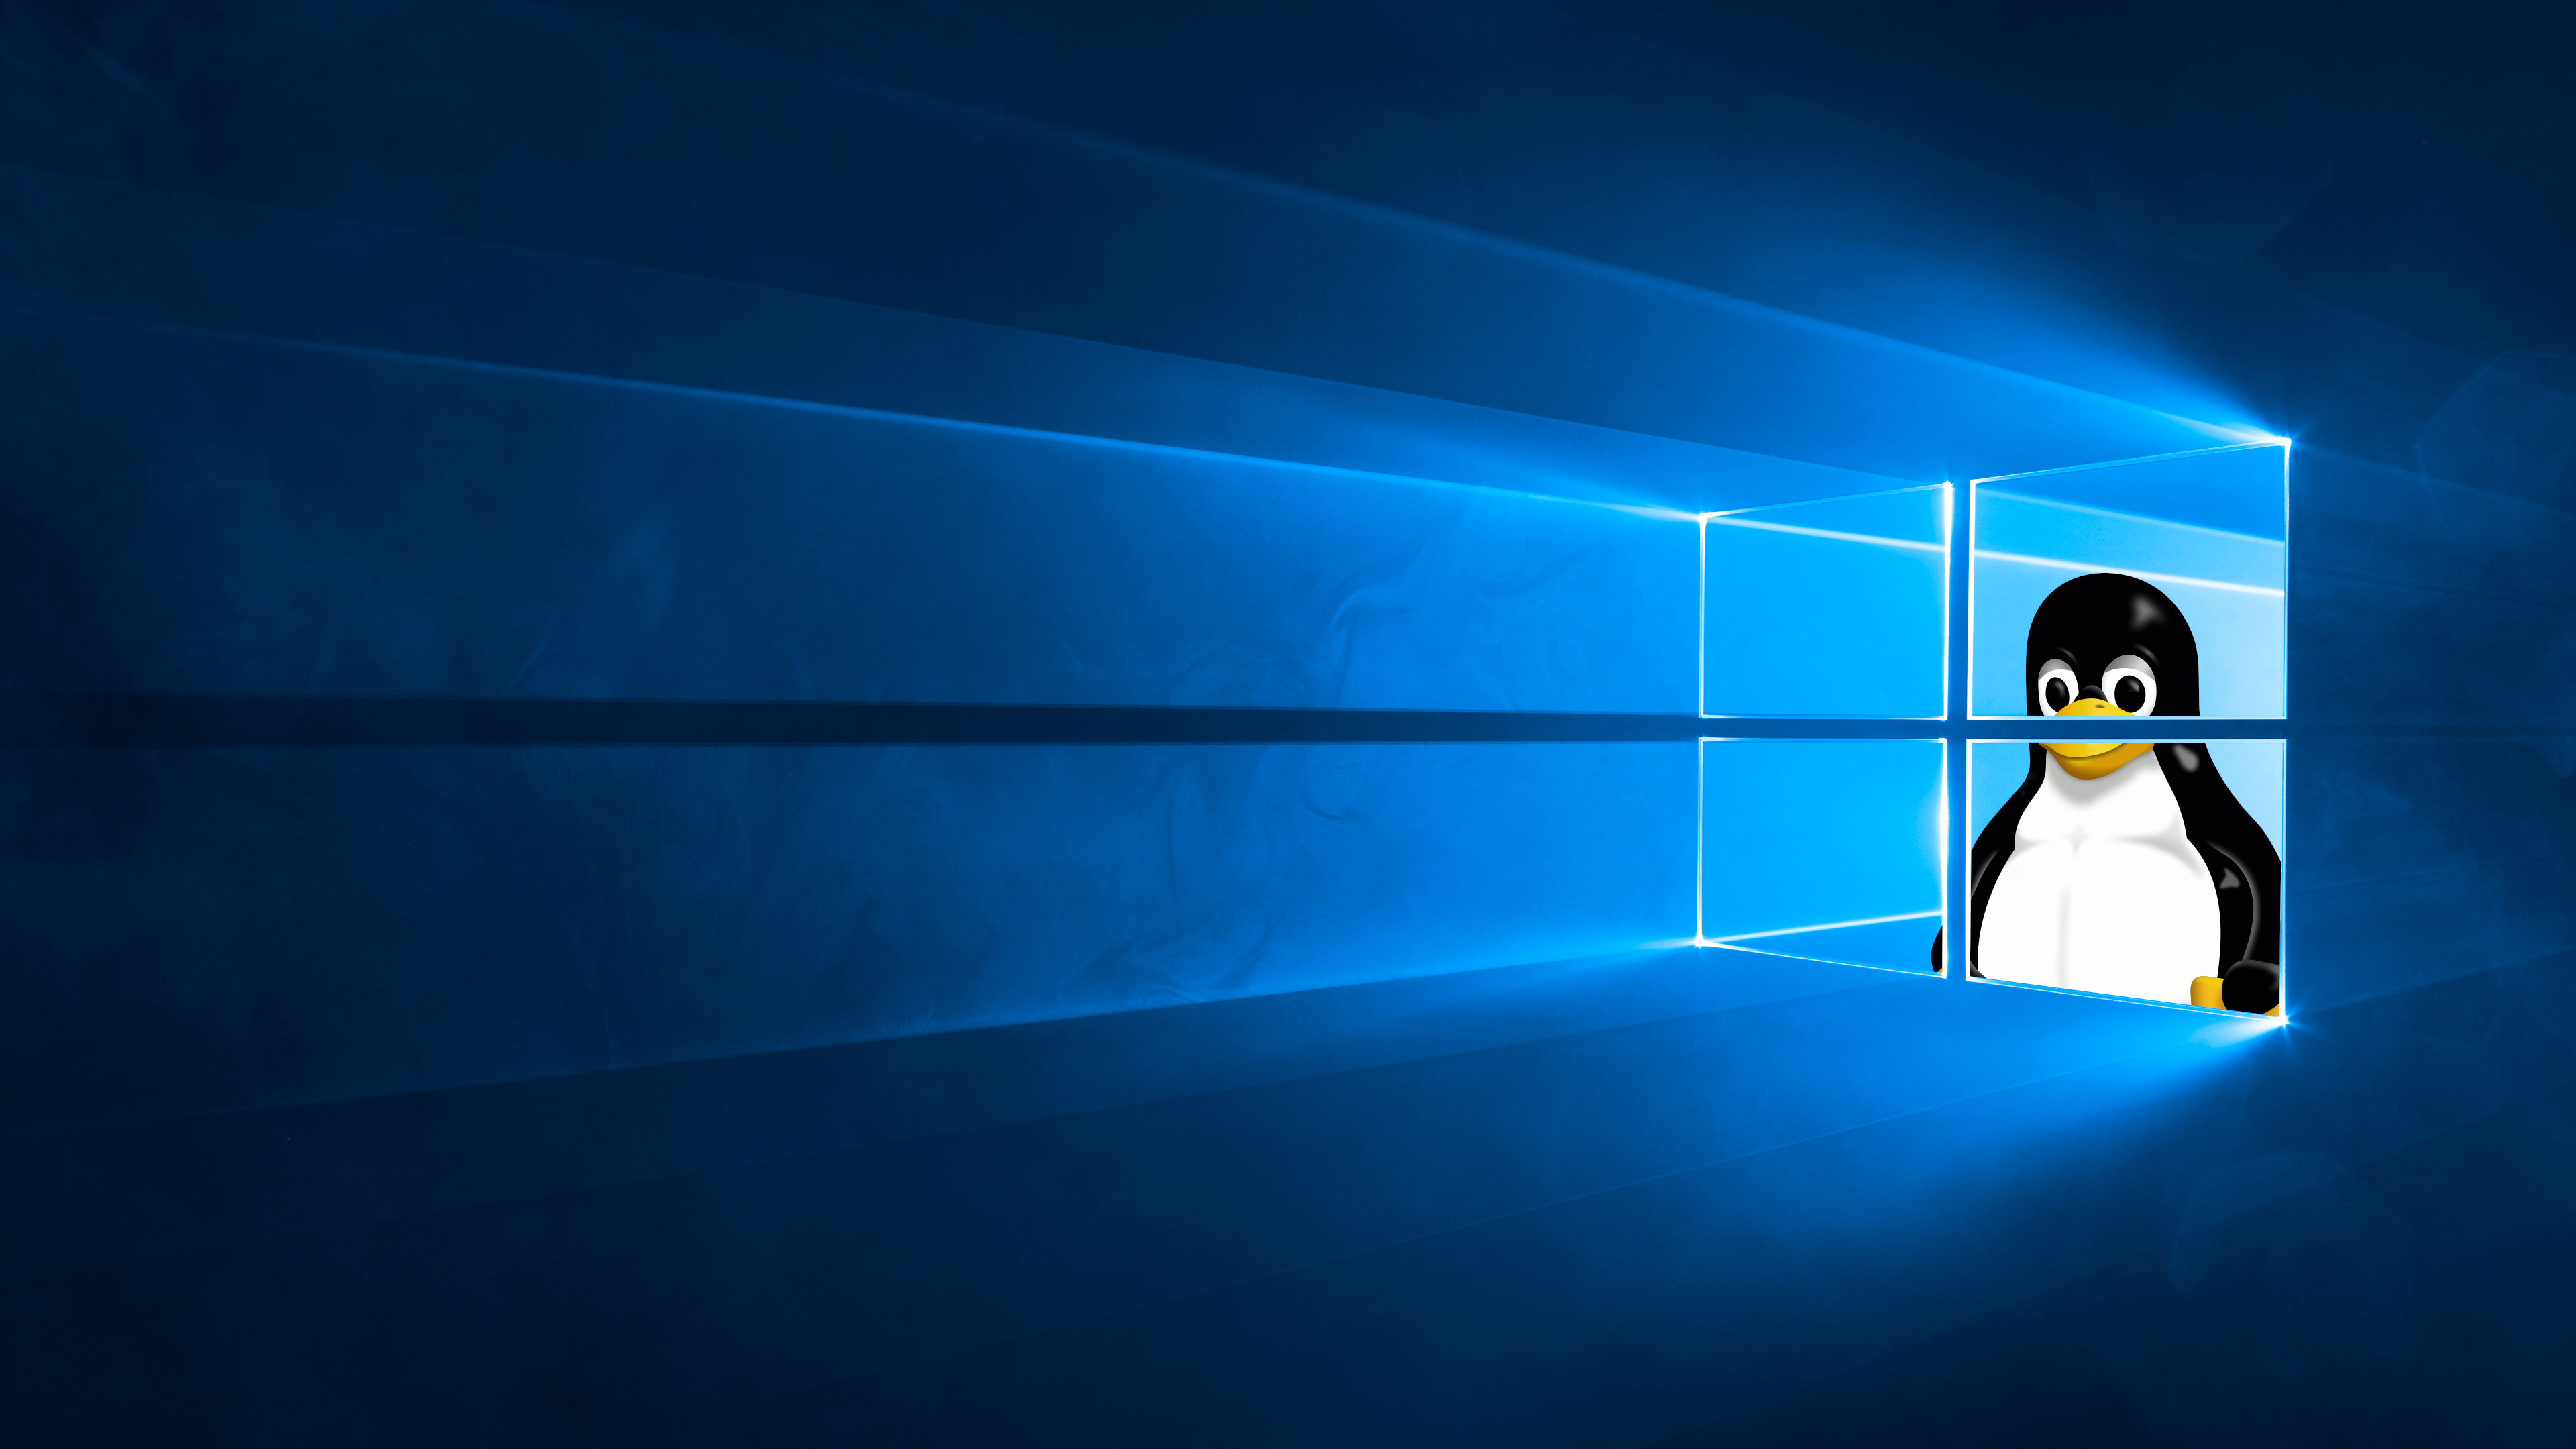 Windows 10 Tux Linux GNU Microsoft Penguin 3840x2160